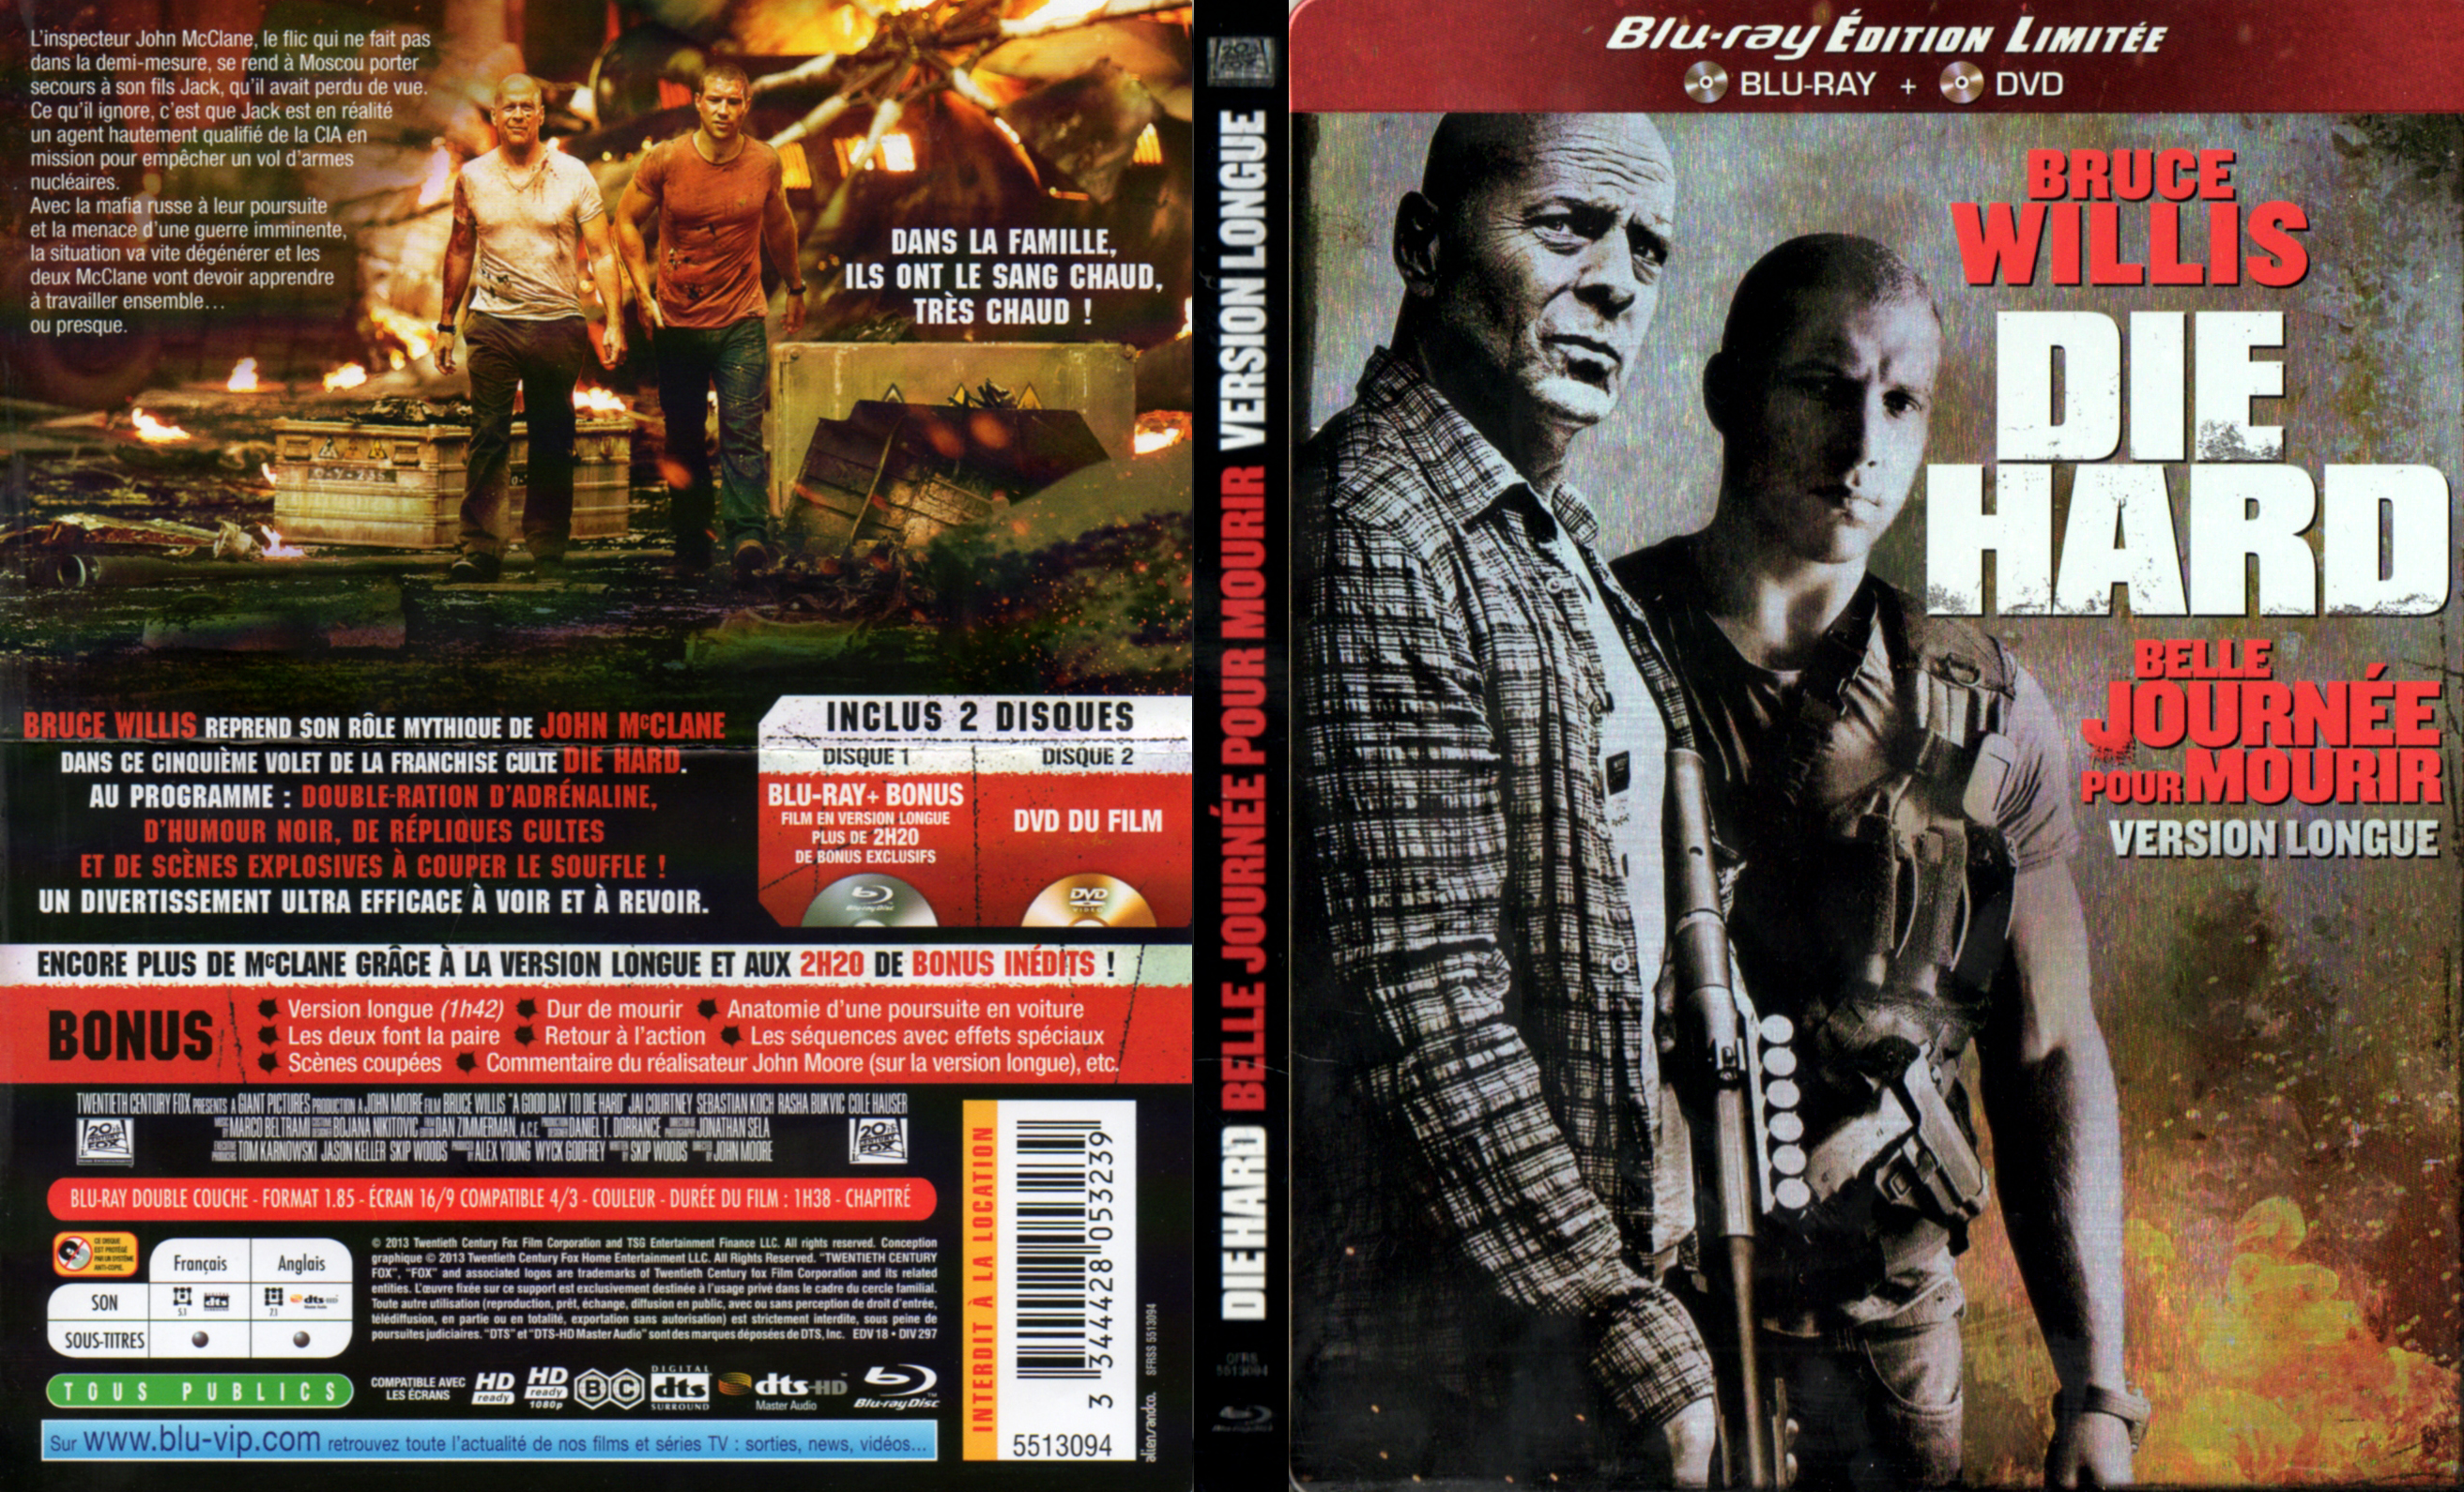 Jaquette DVD Die Hard : belle journe pour mourir (BLU-RAY) v2